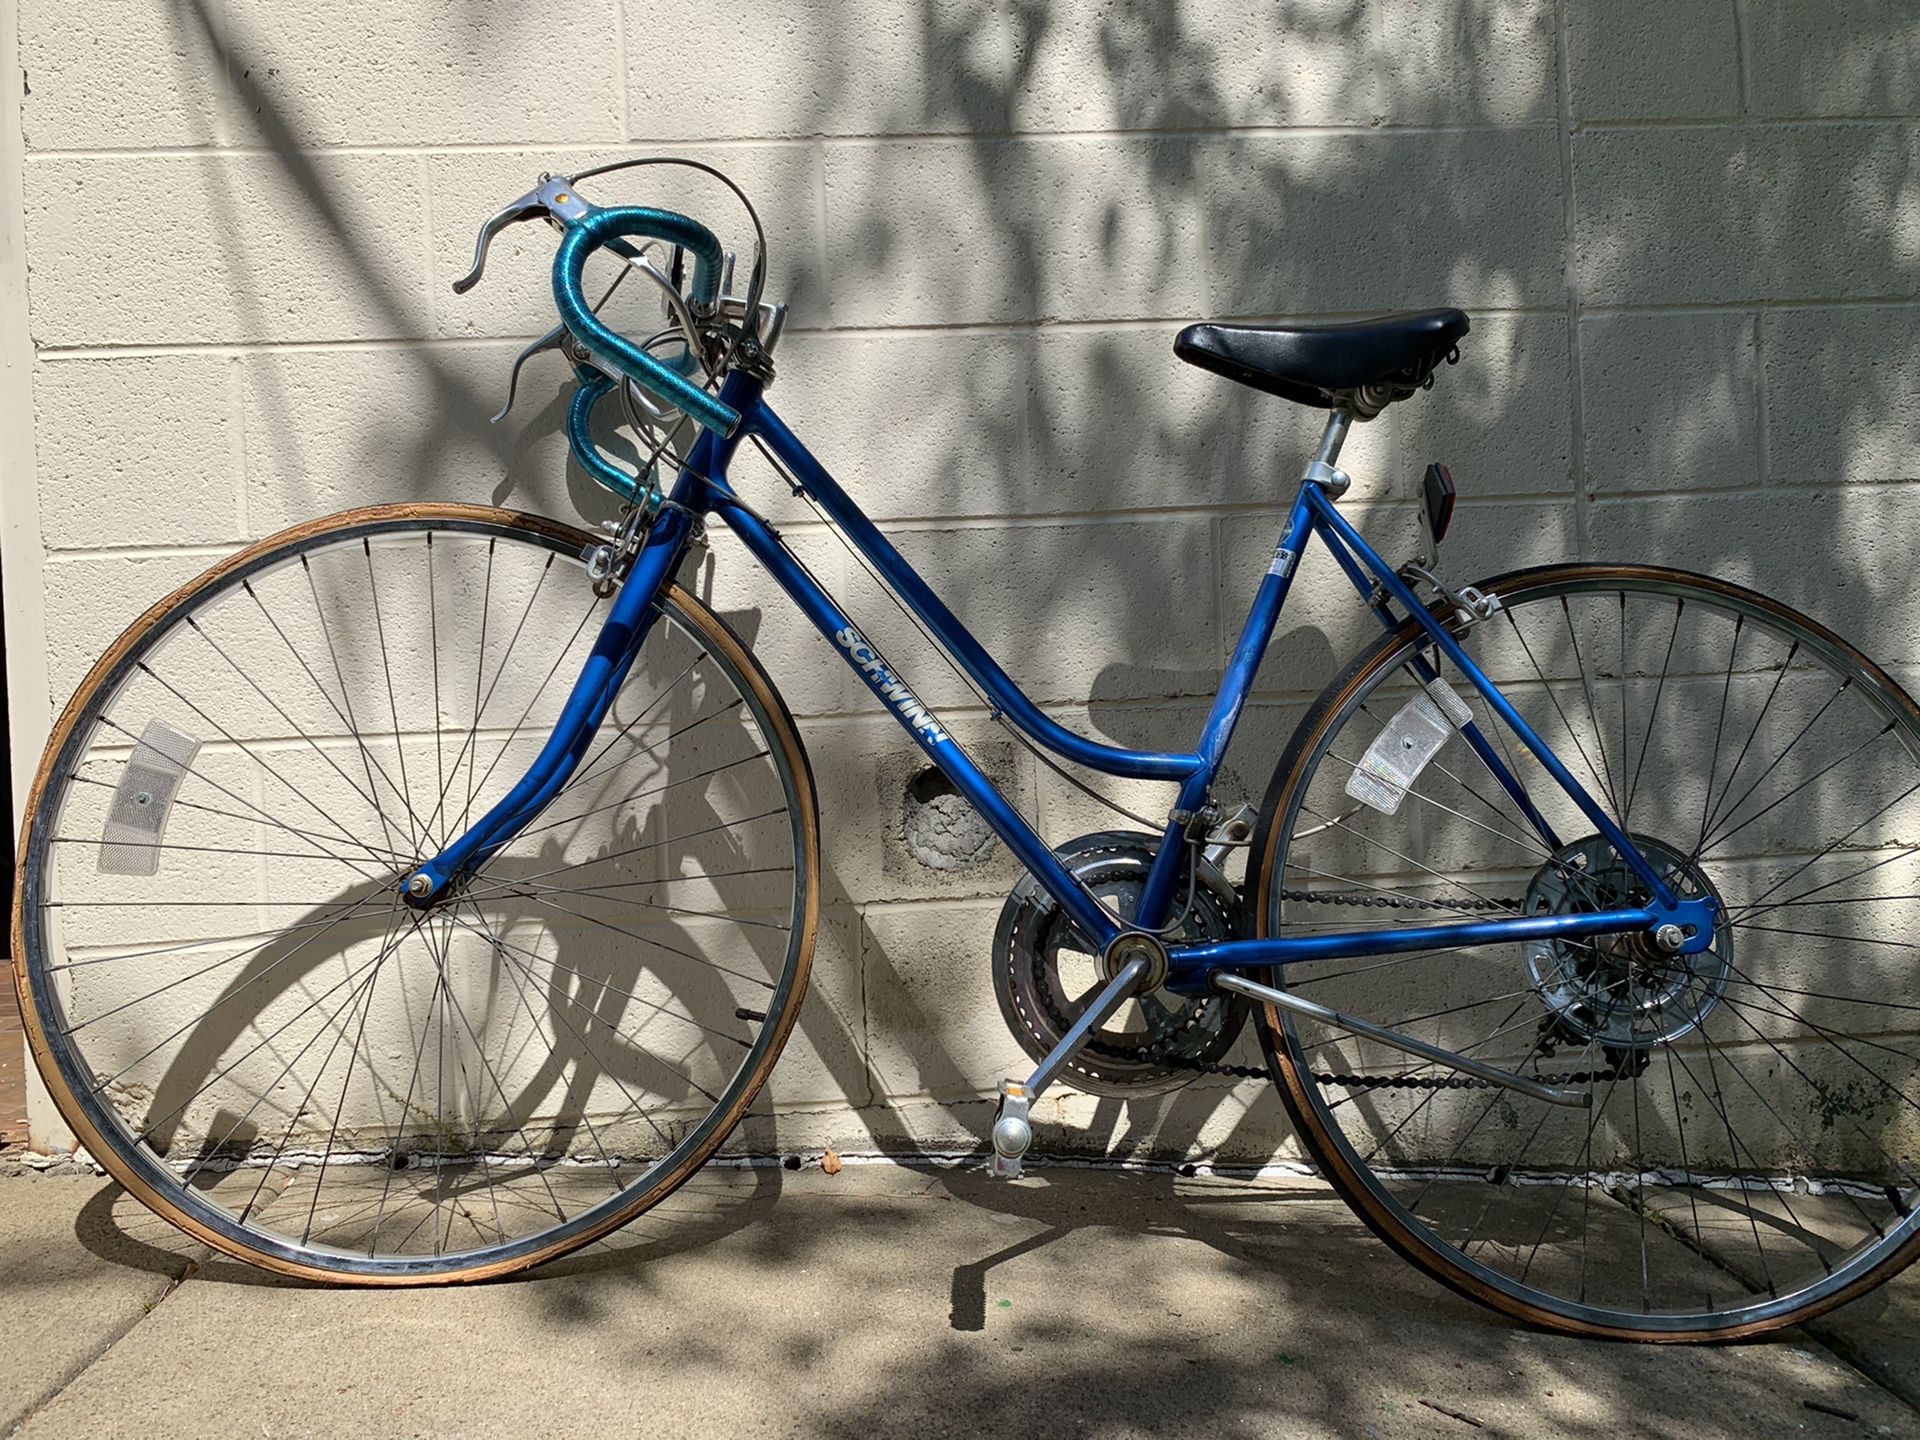 Schwinn Chicago Road Bicycle Bike (Needs New Tires)